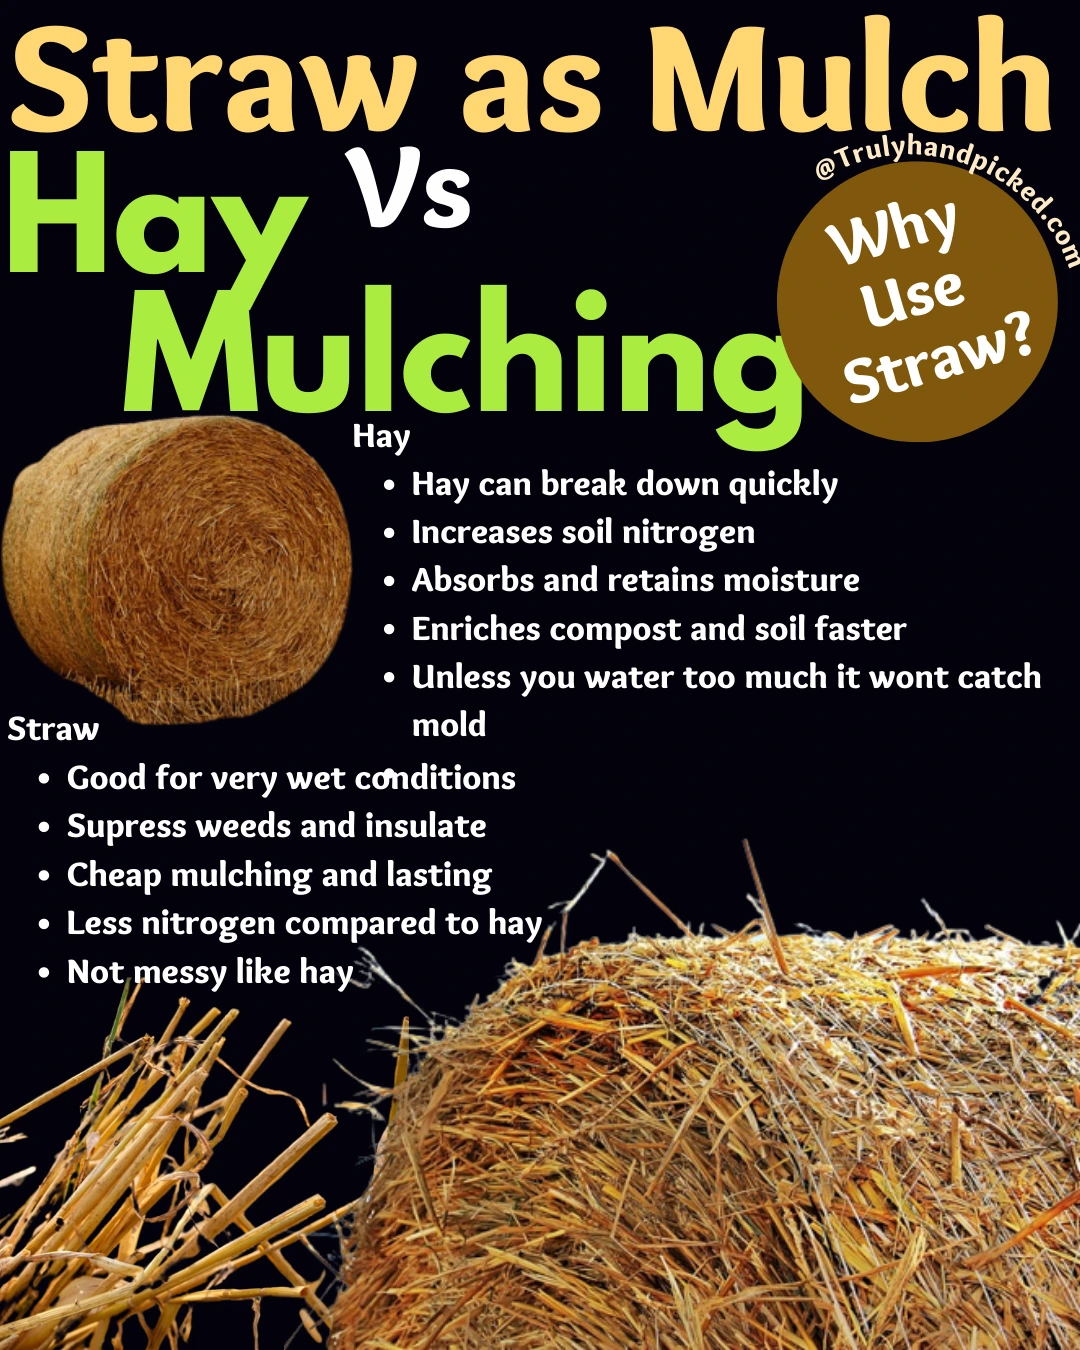 Hay vs straw as mulching material why use straw mulching